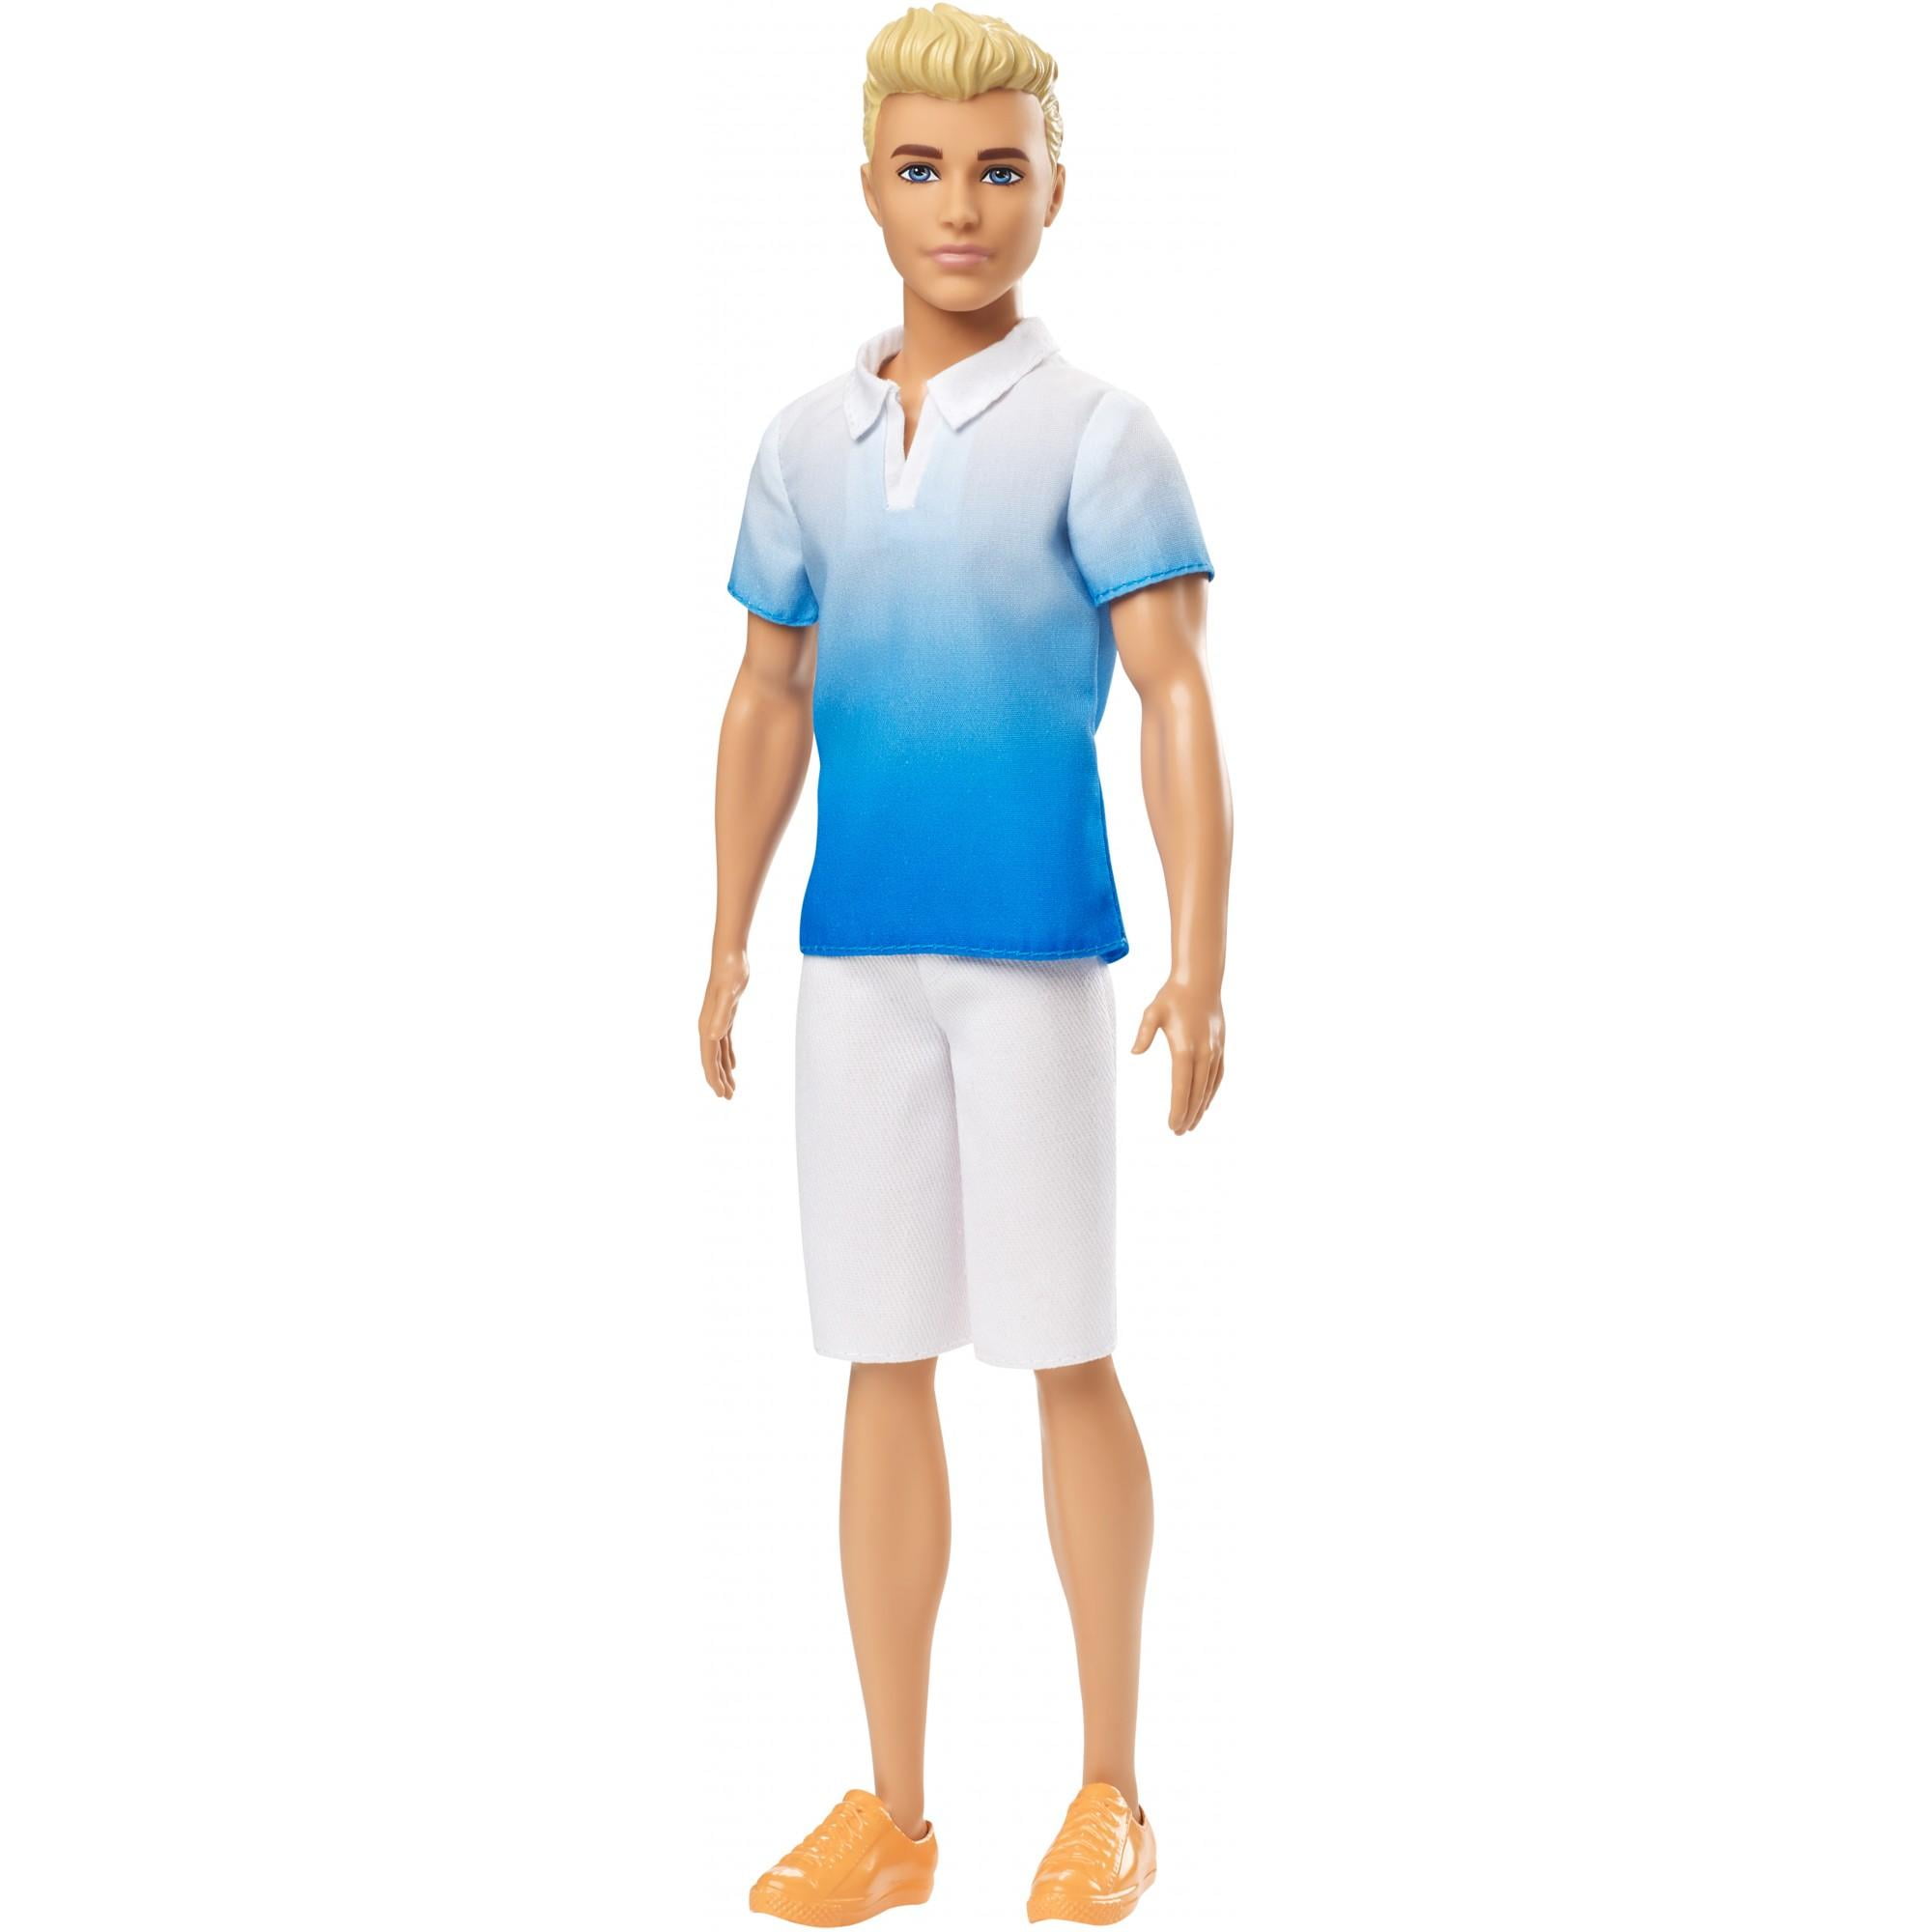 Barbie Ken Blue Shirt Top Fashionista Doll Fashion Clothes Accessory 